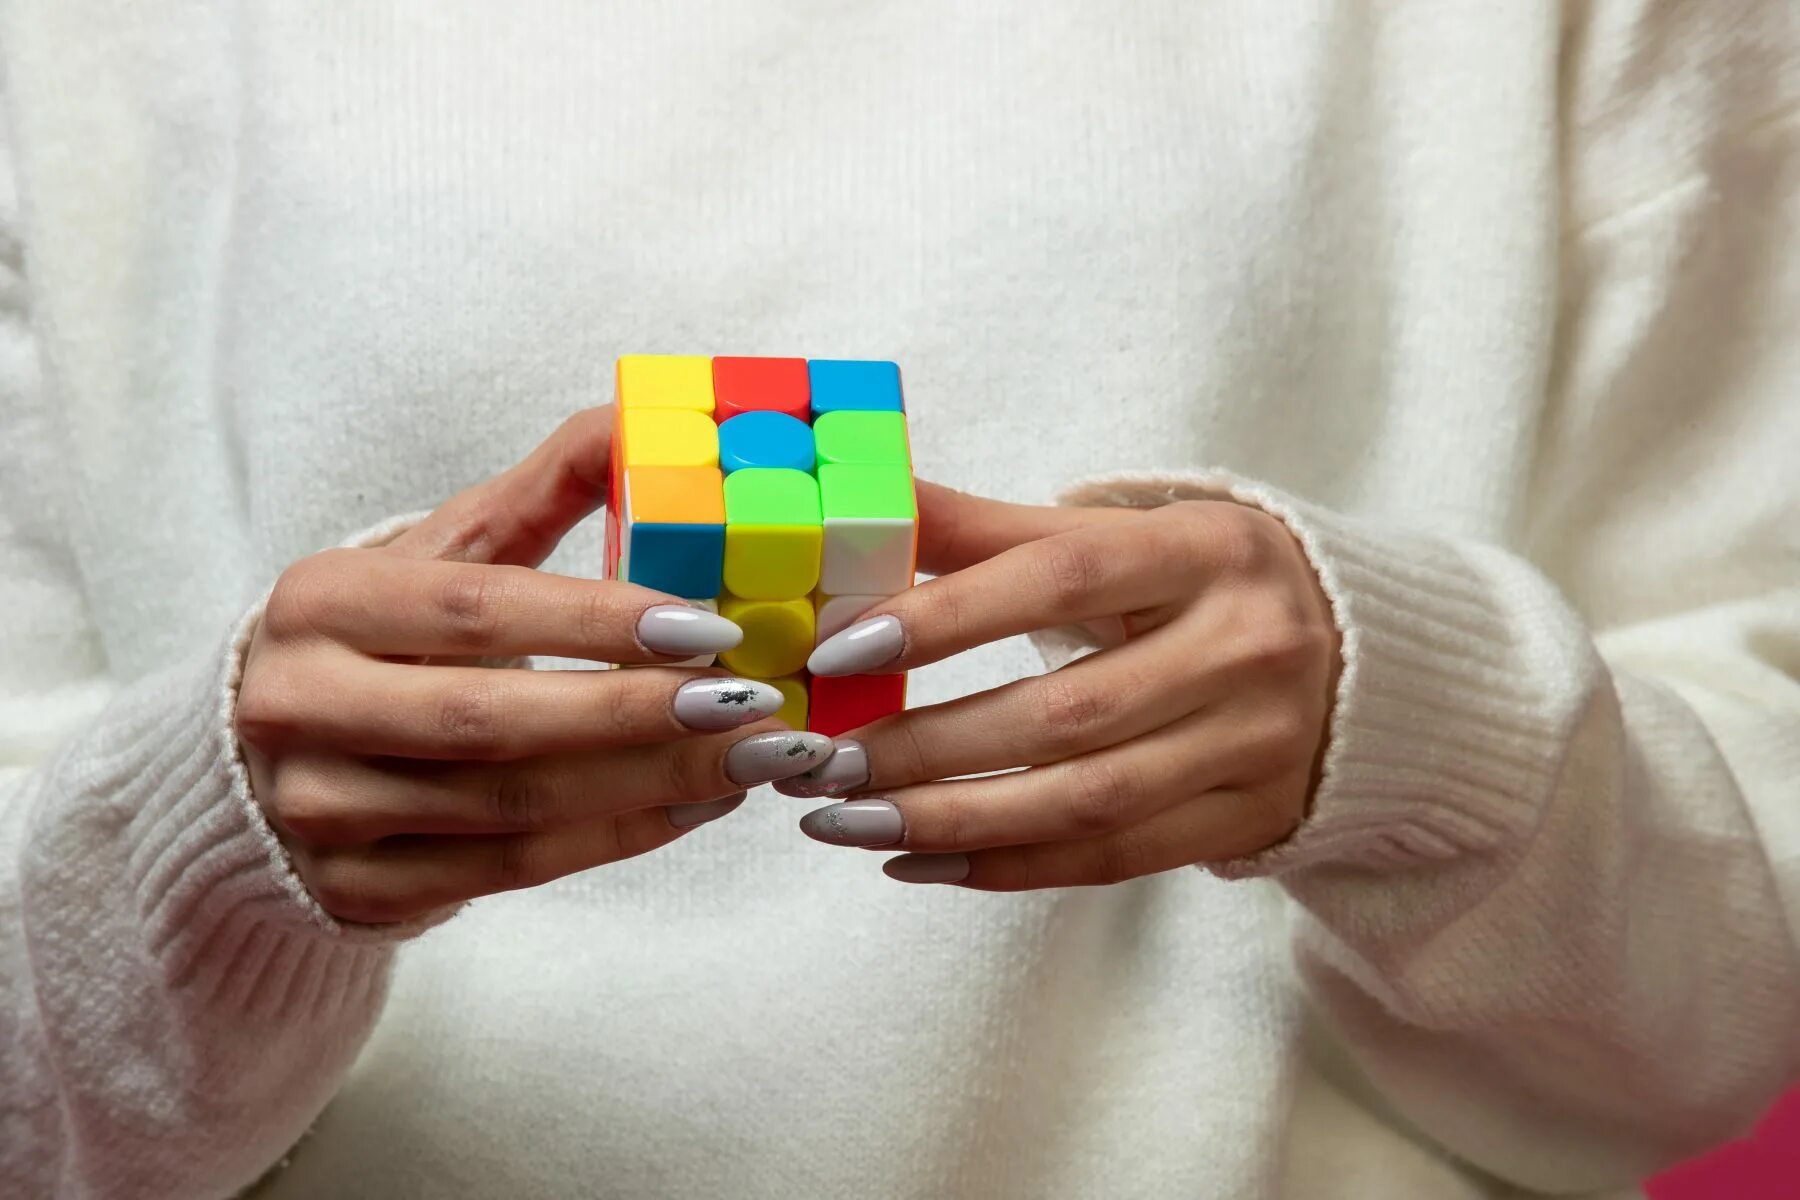 Кубик Рубика в руках. Кубик Рубика в женских руках. Рука с кубиками. Девушка с кубиком Рубика. Включи кубики есть